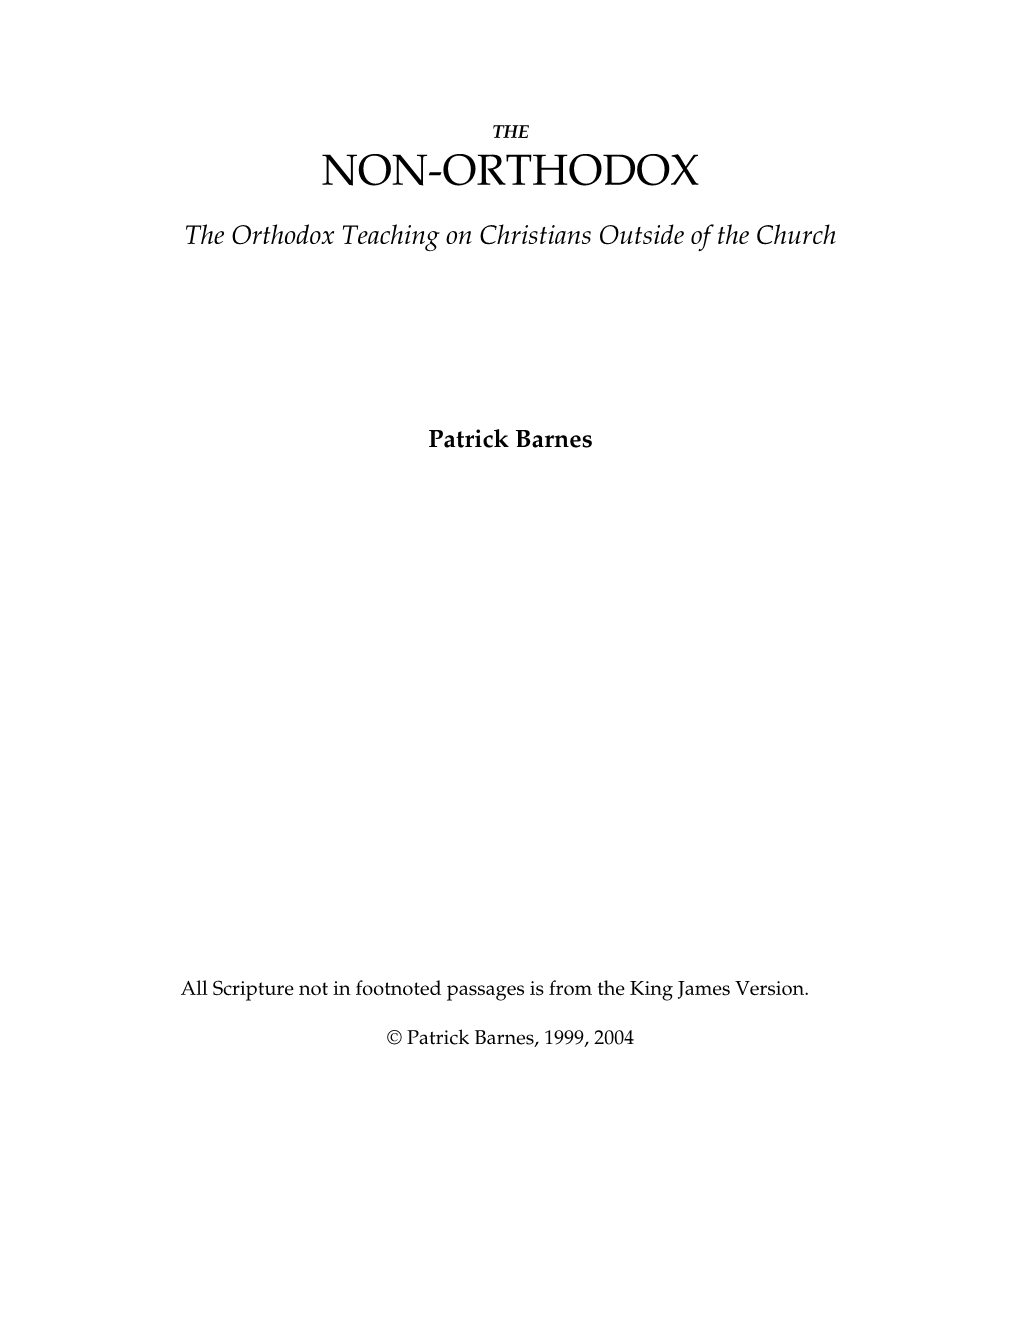 Non-Orthodox